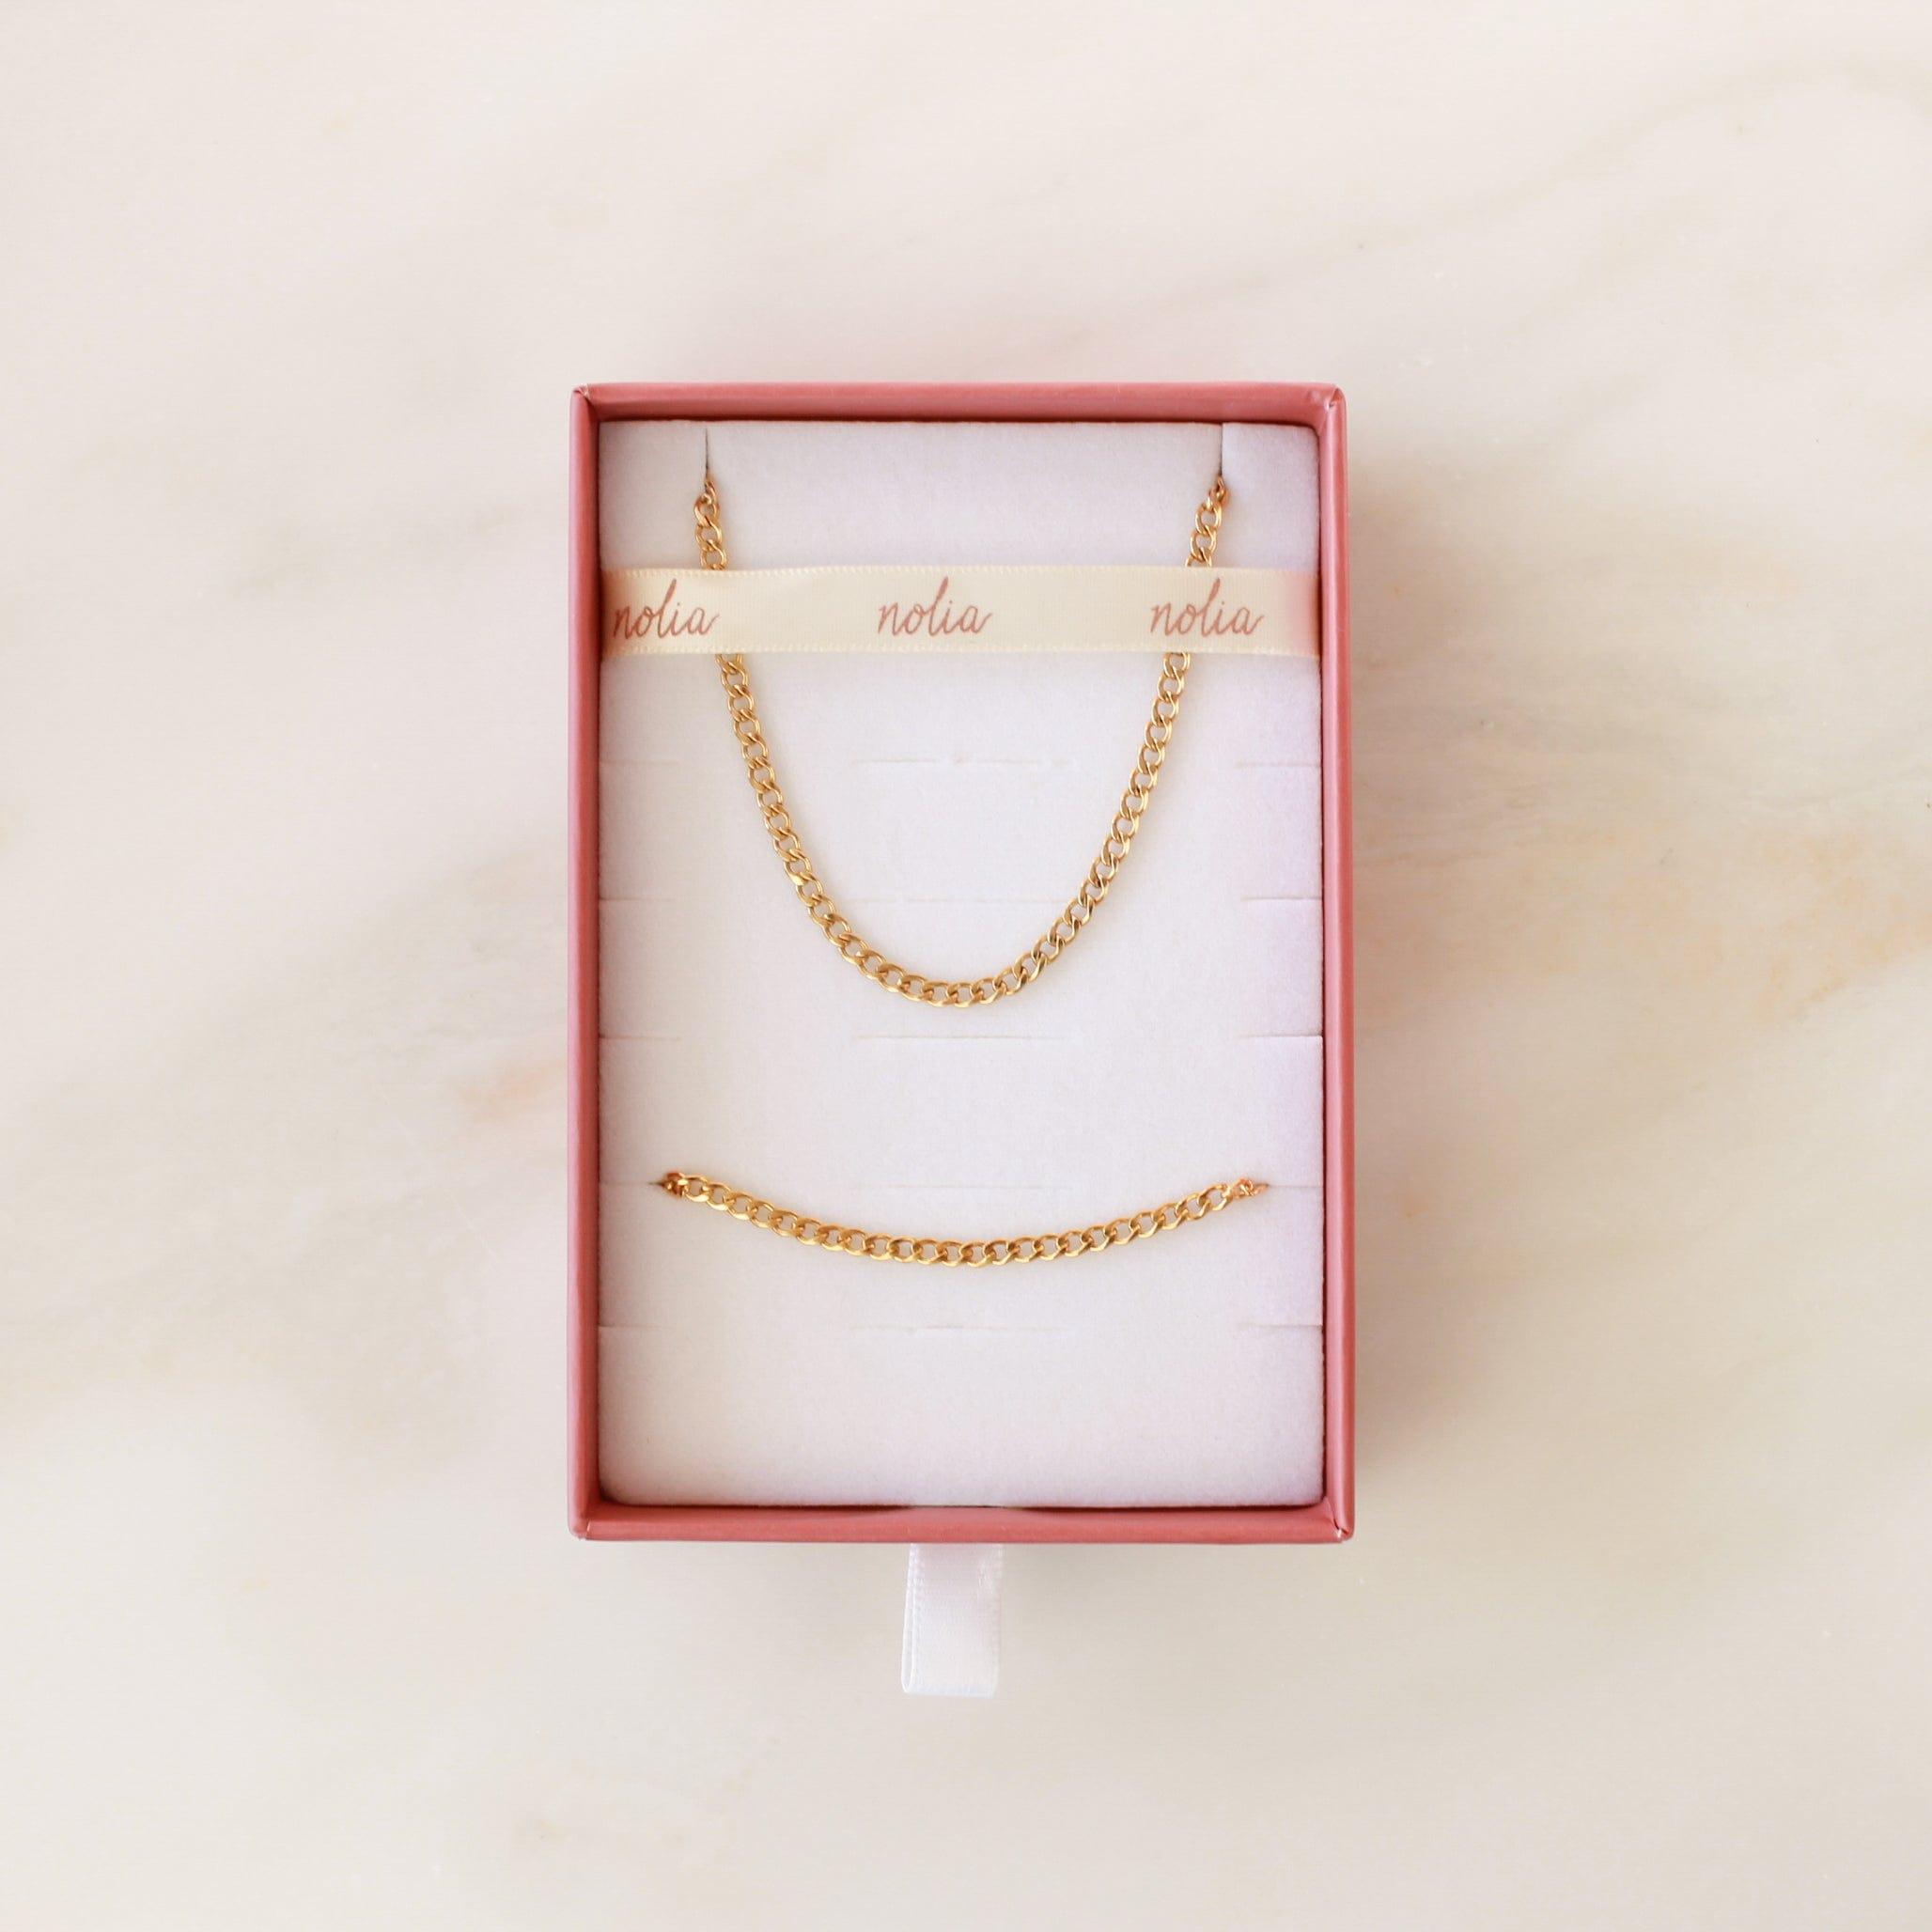 Wyatt Chain Gift Set - Nolia Jewelry - Meaningful + Sustainably Handcrafted Jewelry